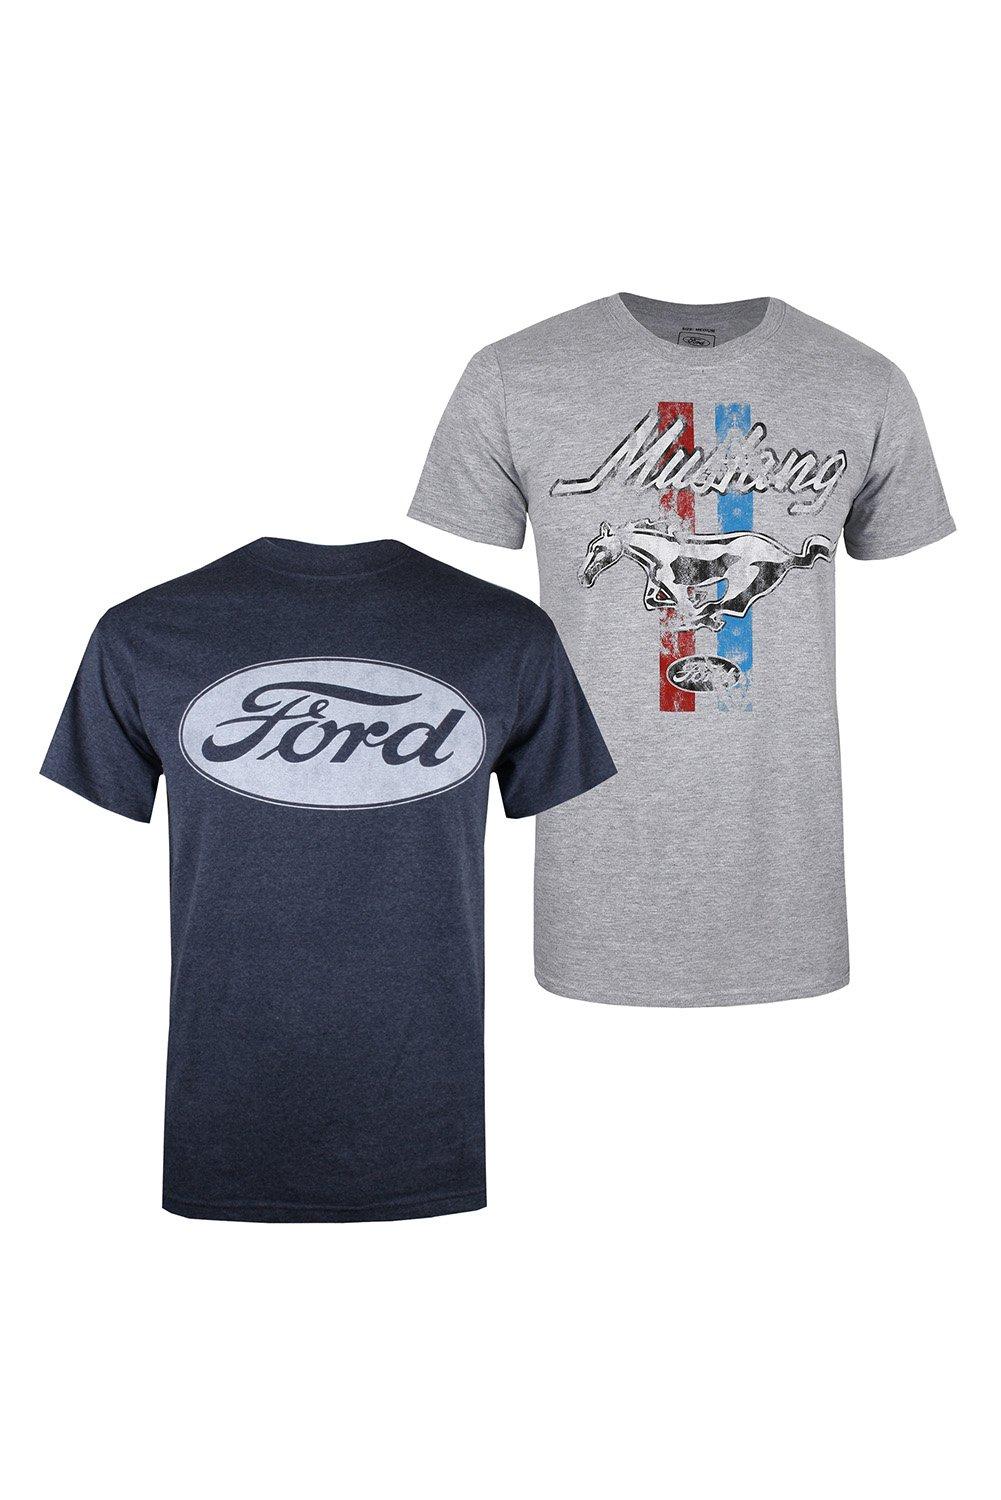 Комплект мужских футболок Ford & Mustang Pack, 2 шт., мультиколор